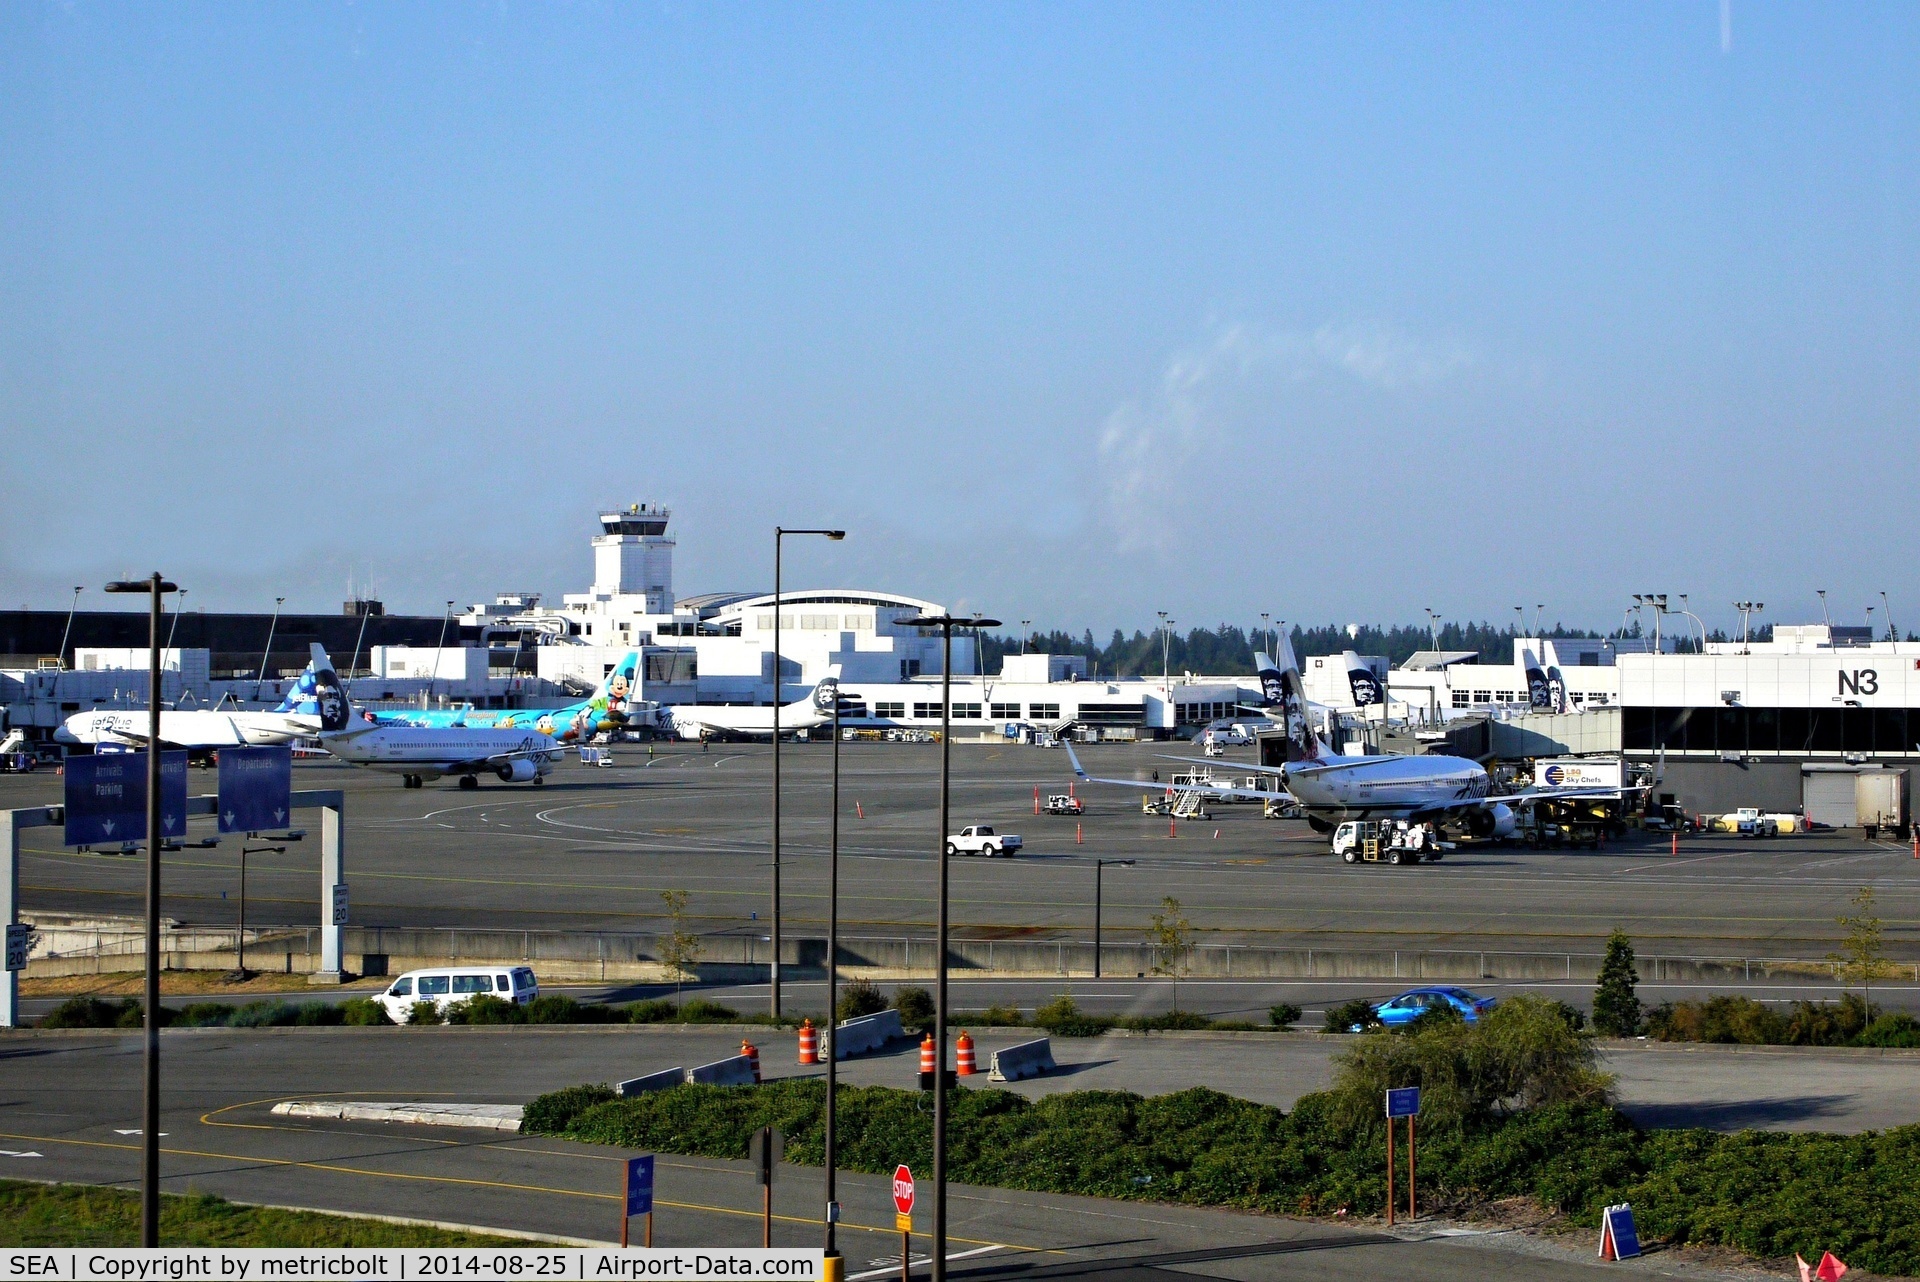 Seattle-tacoma International Airport (SEA) - SeaTac,home of Alaska Airlines